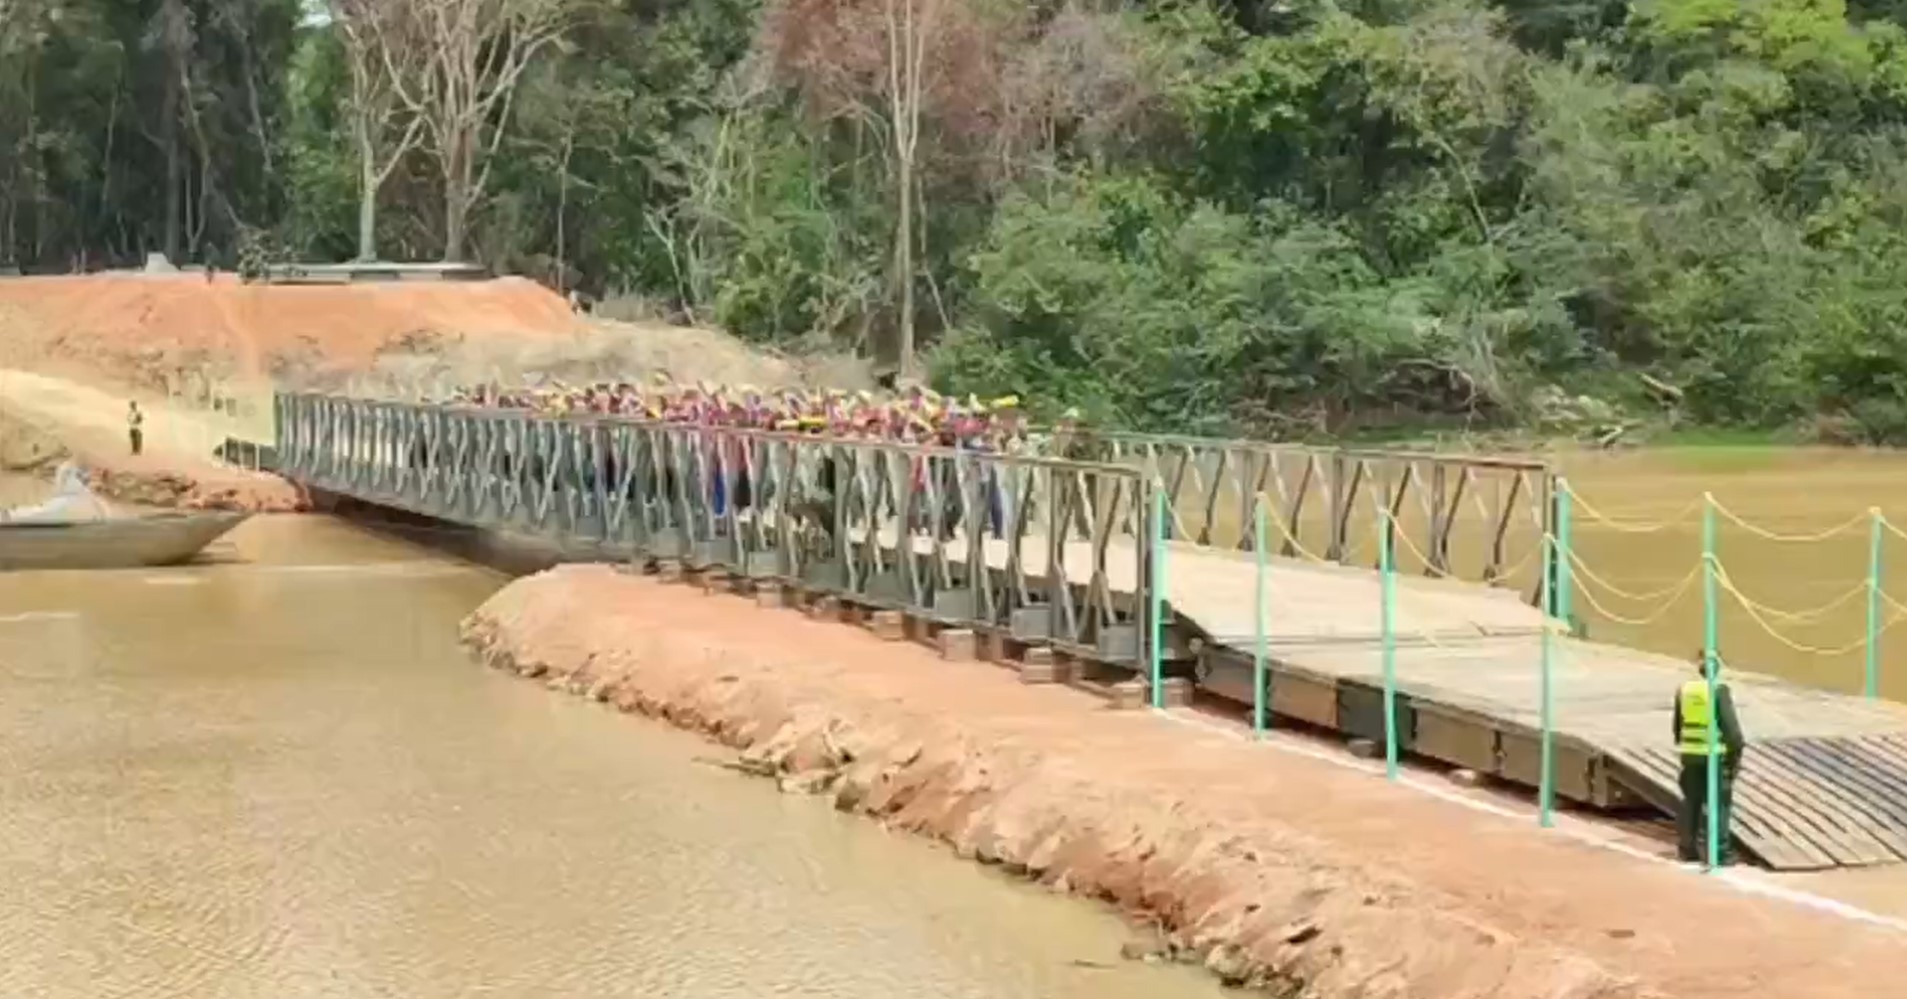 Fanb enables provisional bridge to “bring progress” to Essequibo